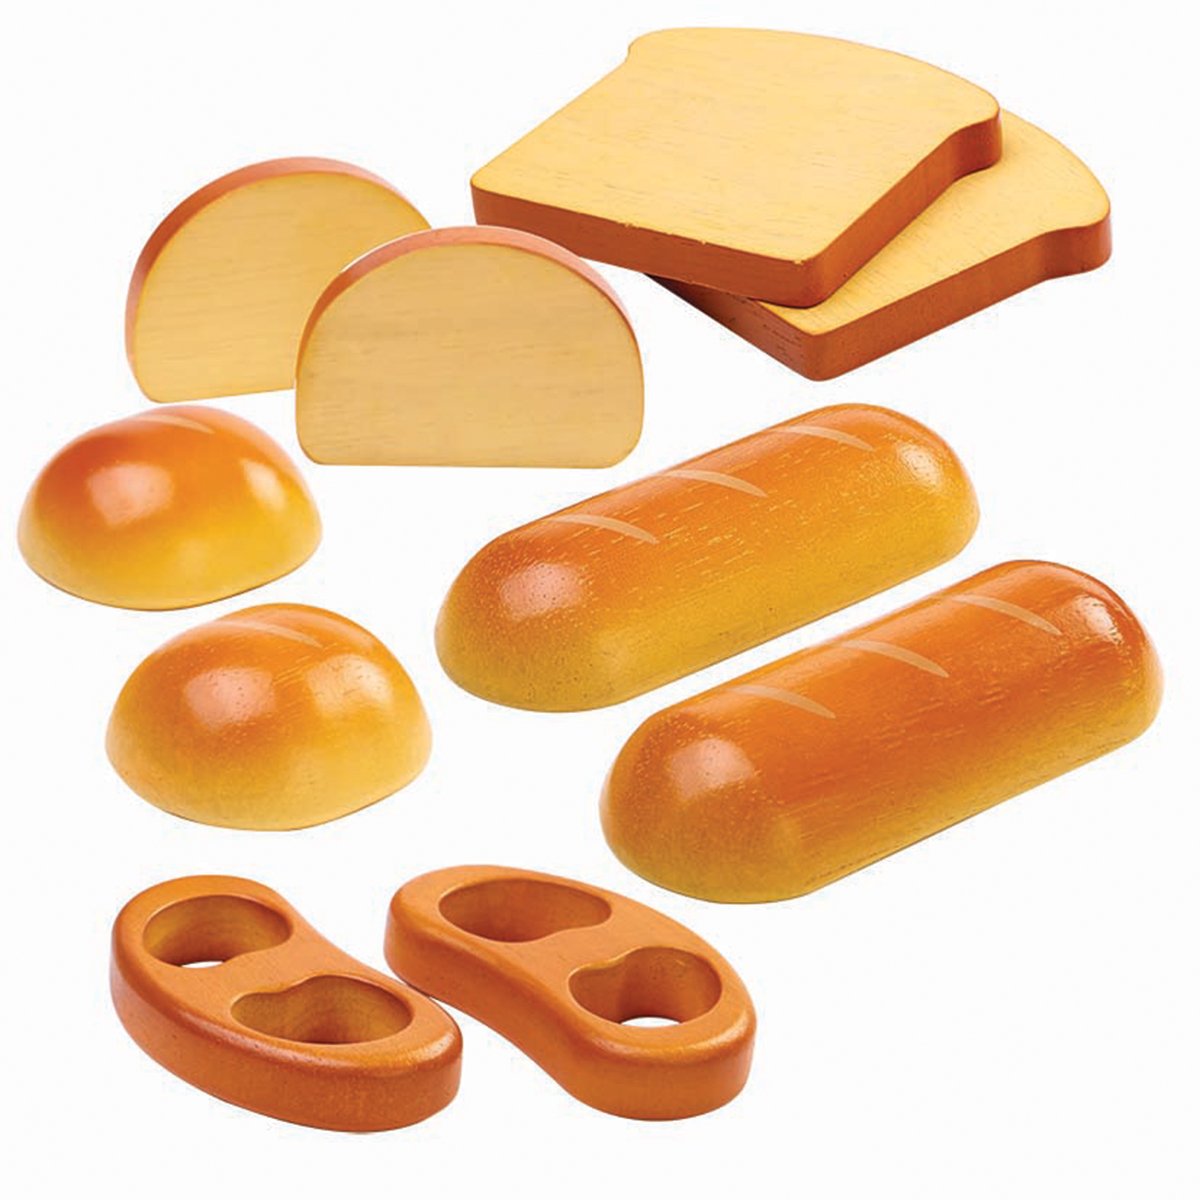 Plan Toys Bread Set – 8 Piece Set